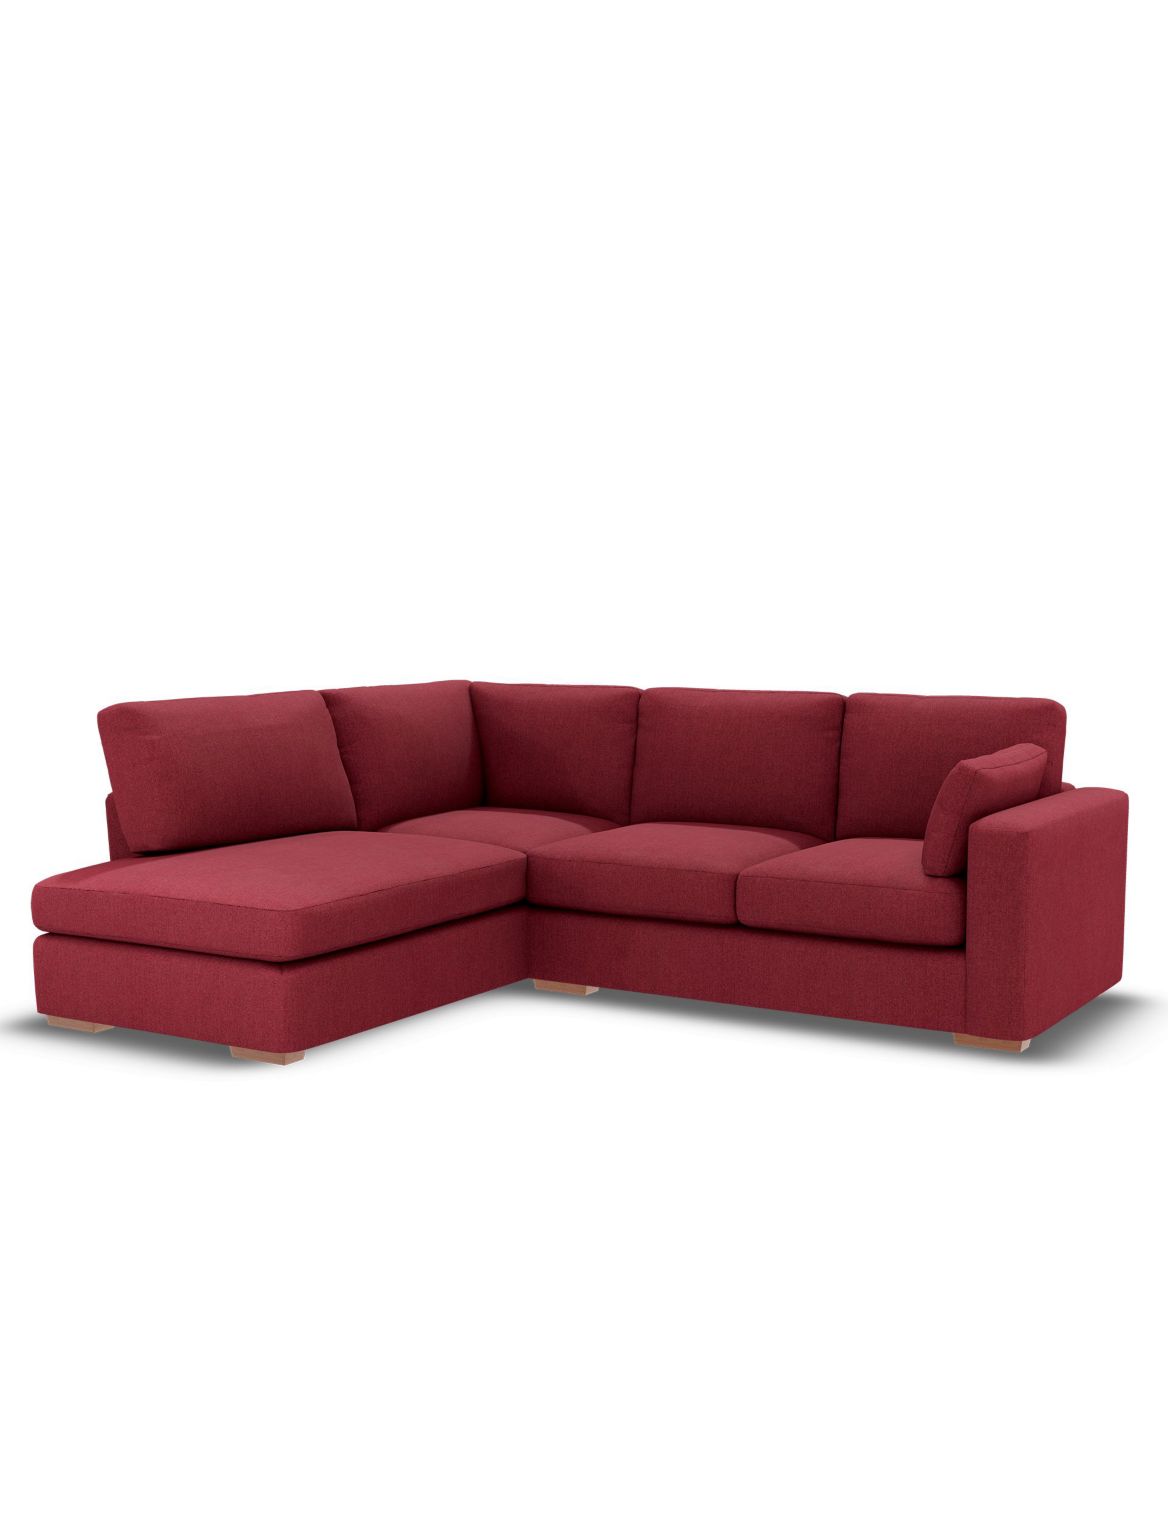 Boston Small Corner Chaise Sofa (Left-Hand) red